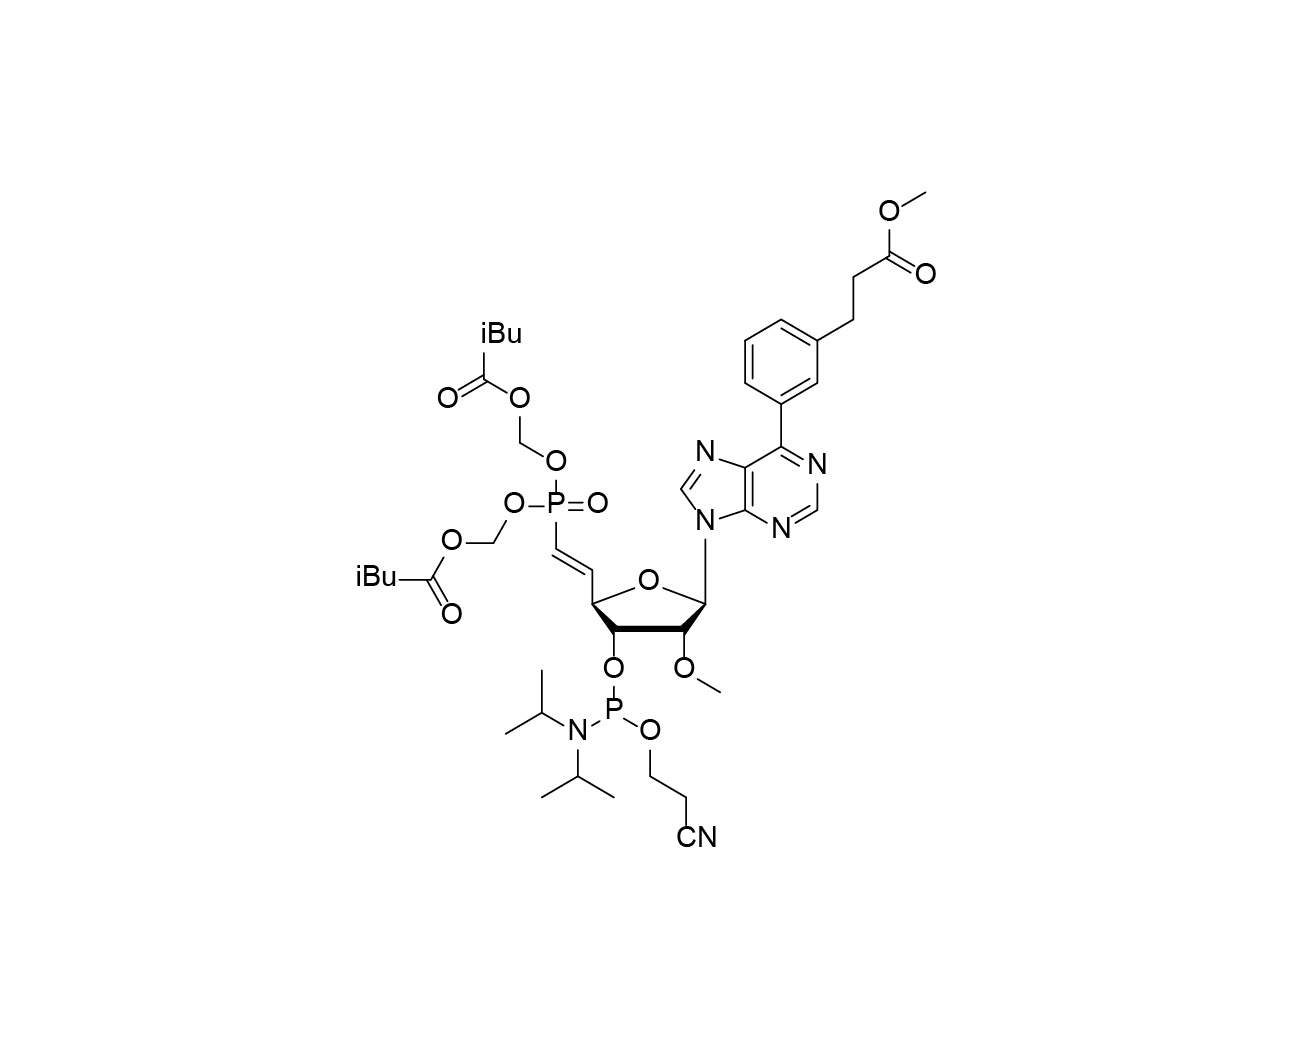 5'-POM-(E)-vinyl phosphonate-2'-O-Me-6-Deamino-6-(m-benzenepropanoic acid methyl ester)-rA-3'- CE-Phosphoramidite